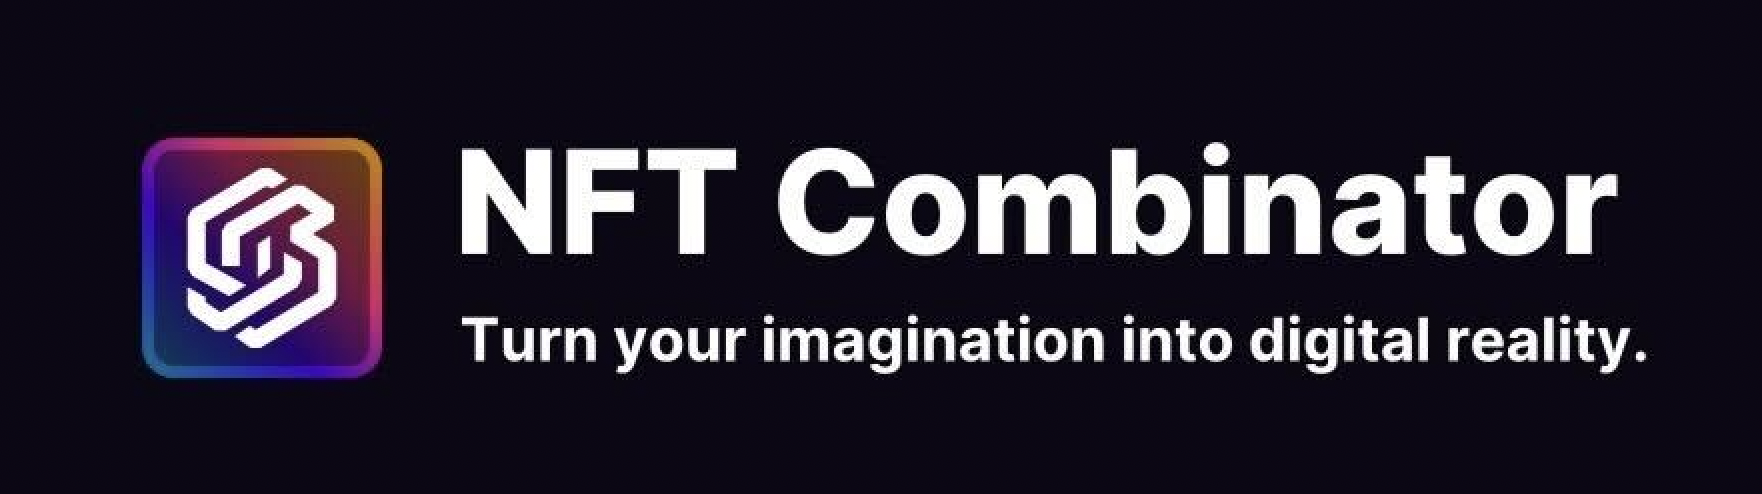 NFT Combinator Genesis Drop - Mind Twisters